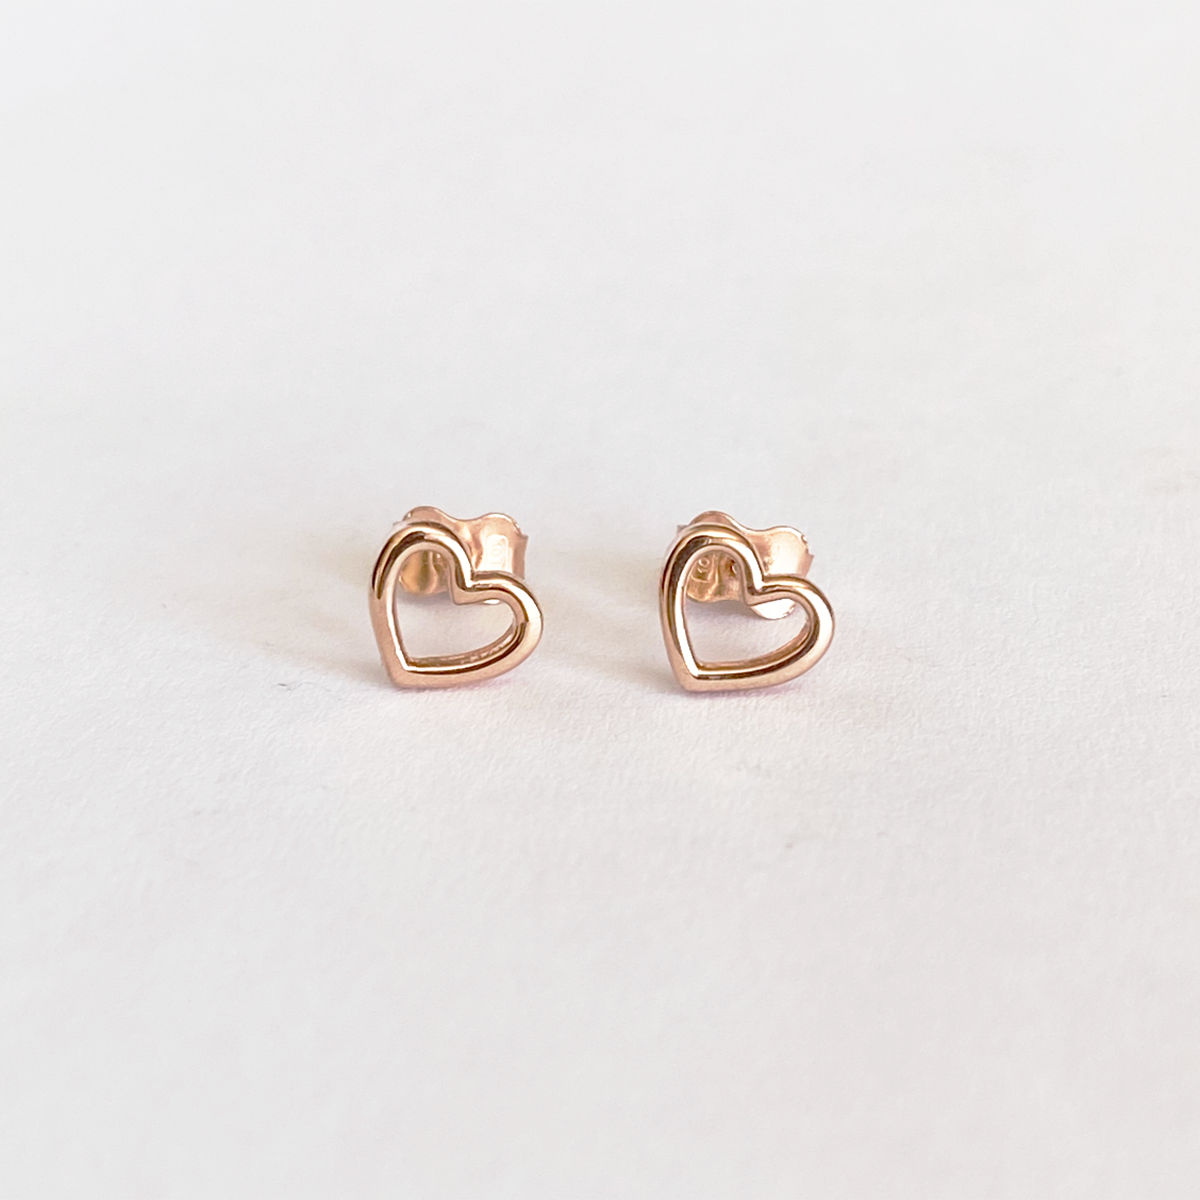 Light heart earrings